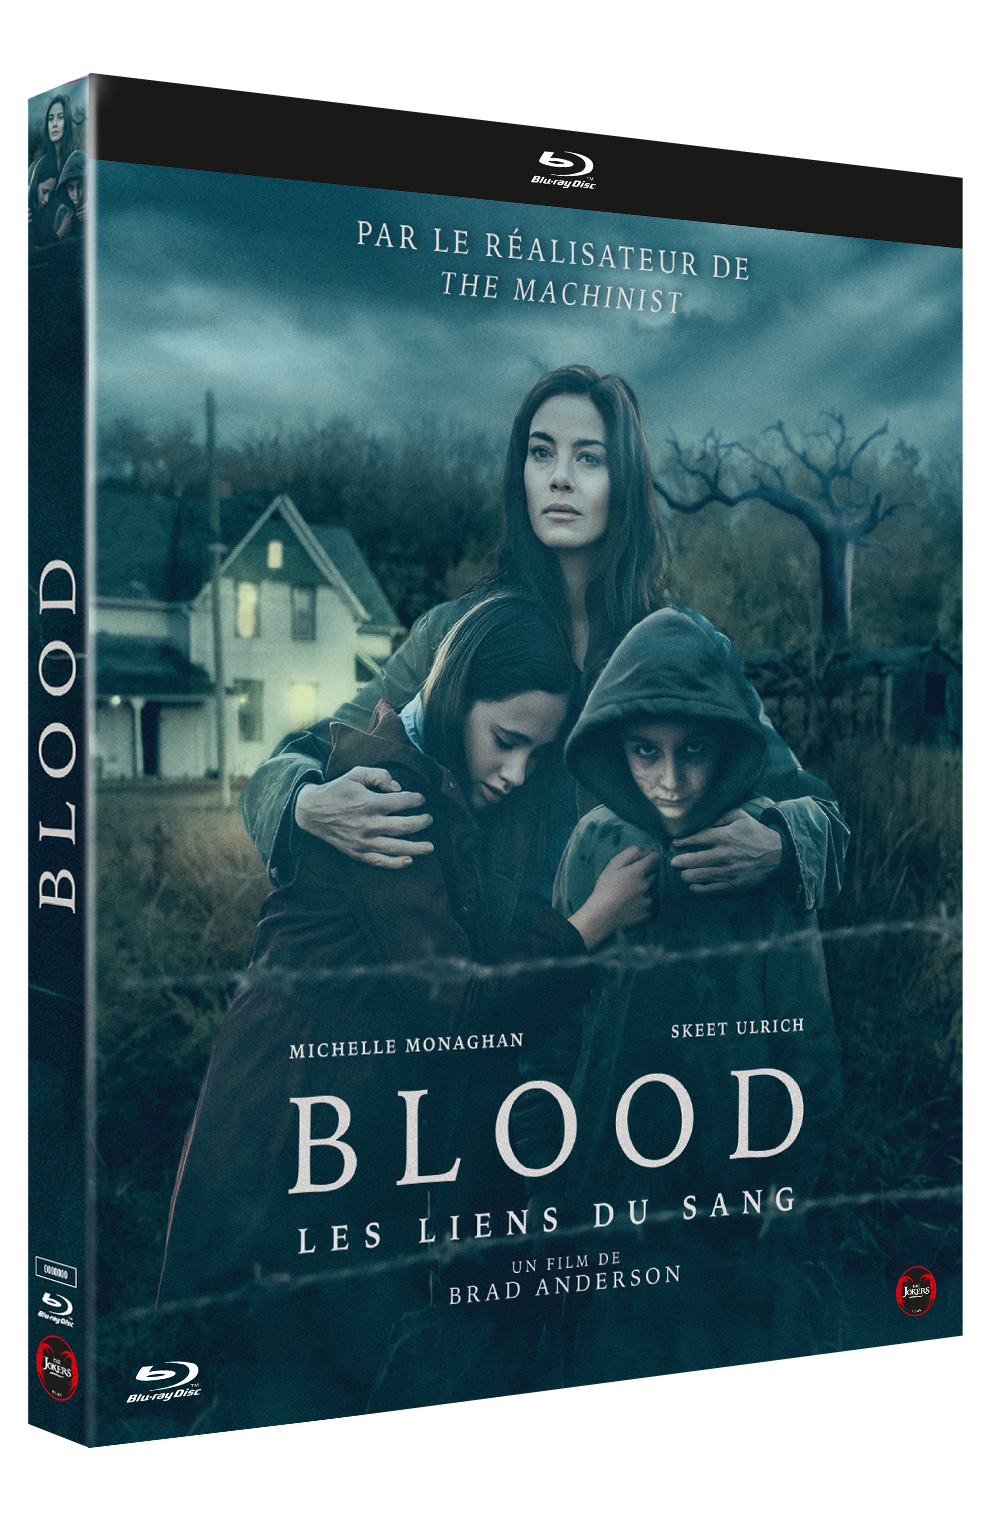 Blu-ray "BLOOD"